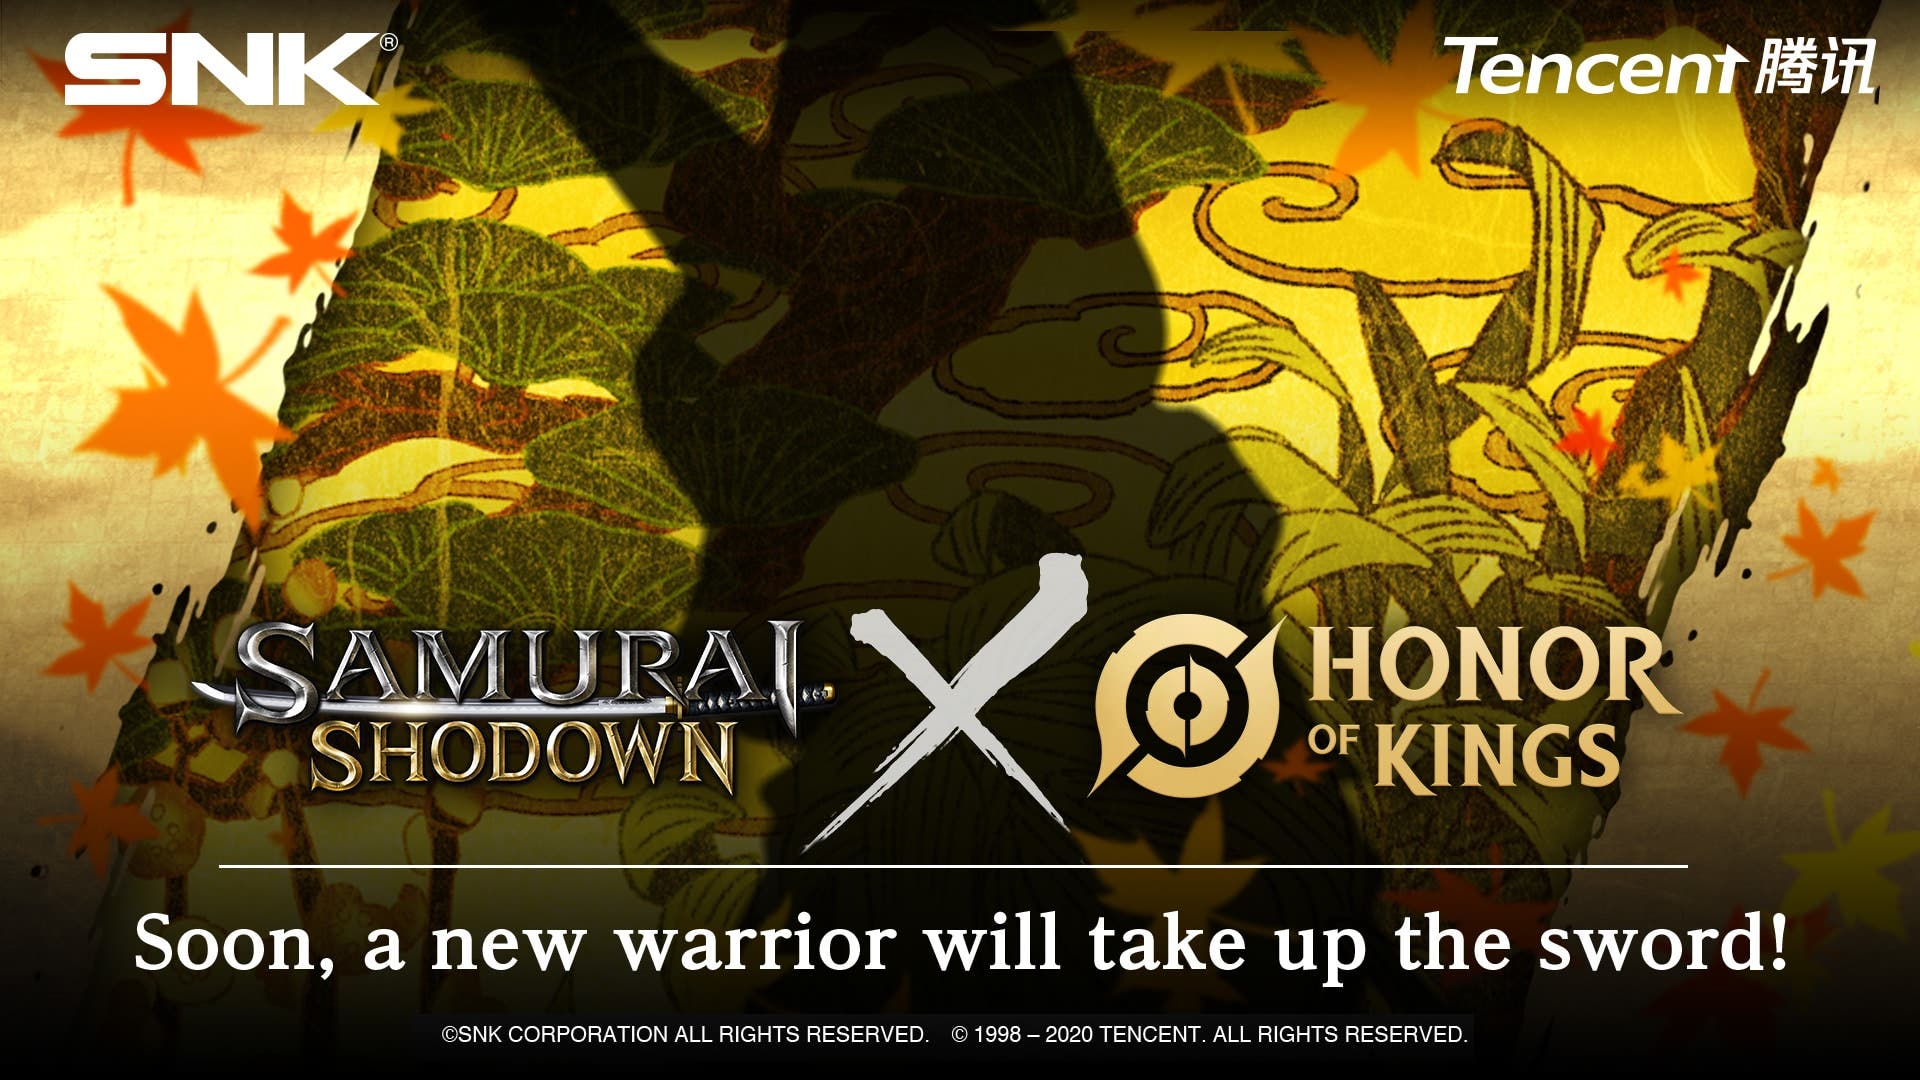 Samurai Shodown confirma un personaje DLC gratuito de Honor of Kings